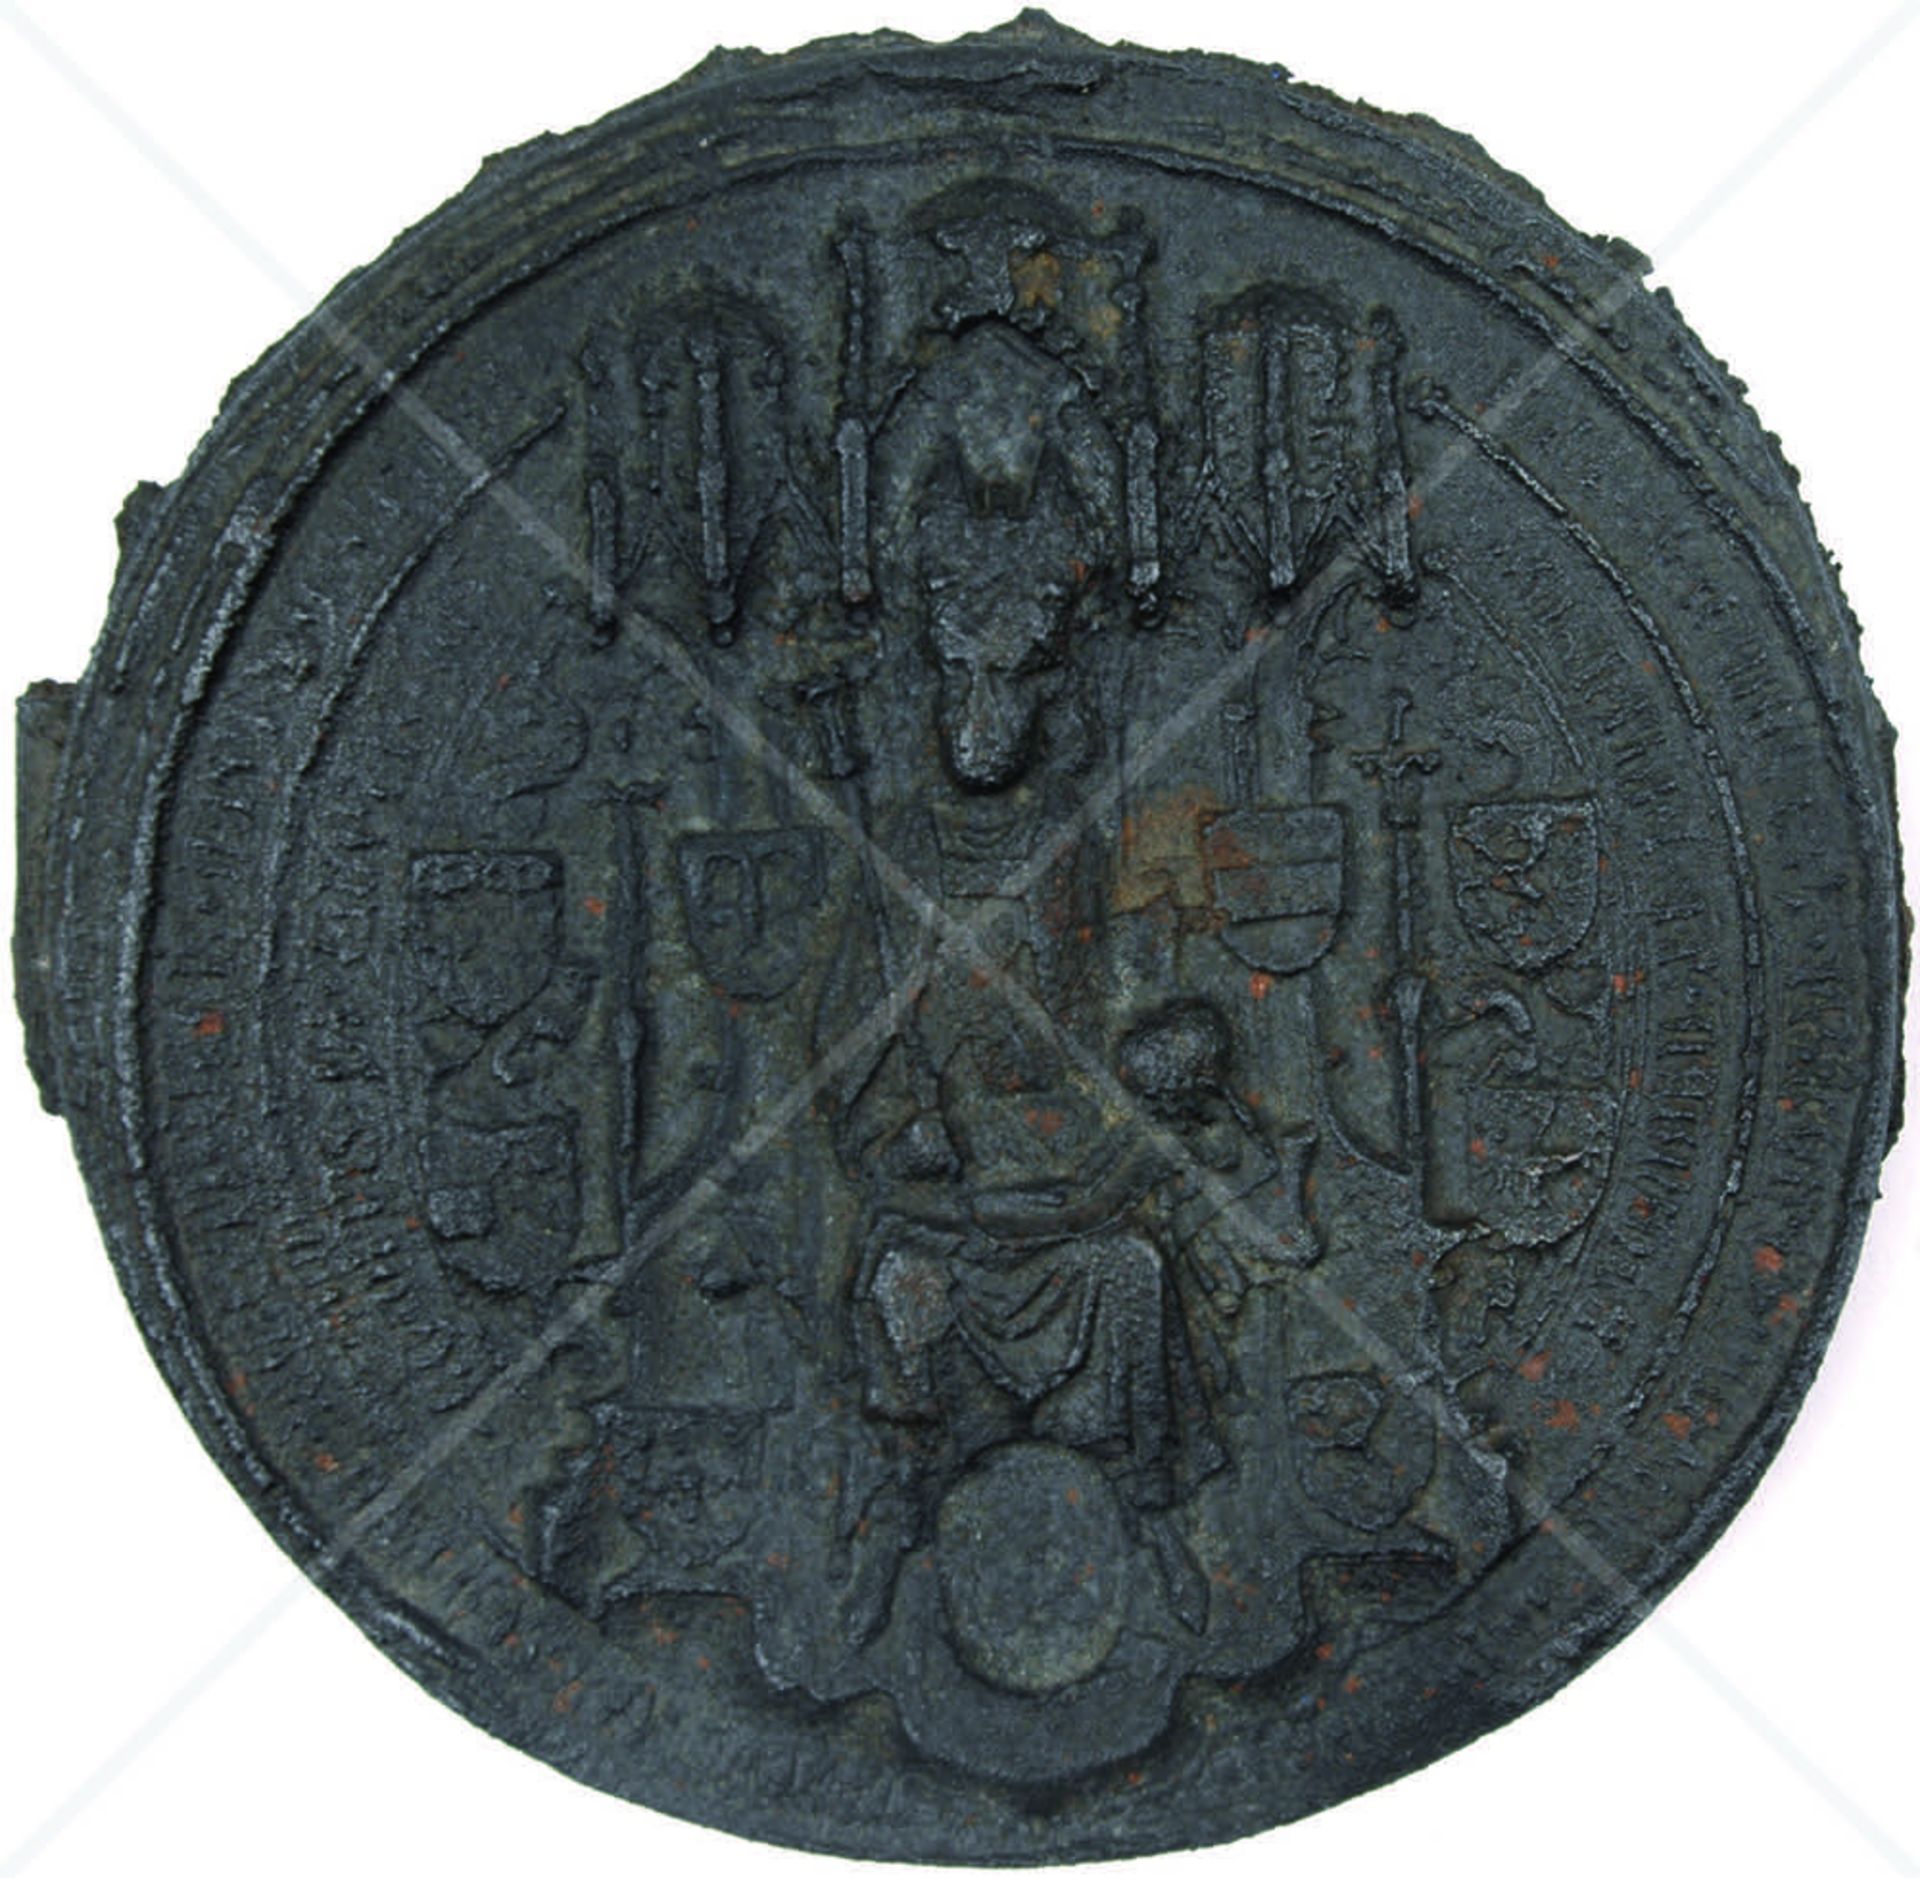 MÜNZSIEGEL KAISER FRIEDRICH III., (1415-93), doppelseitig, Abguss etwa Mitte 19. Jhd., Ø 13,5 cm,